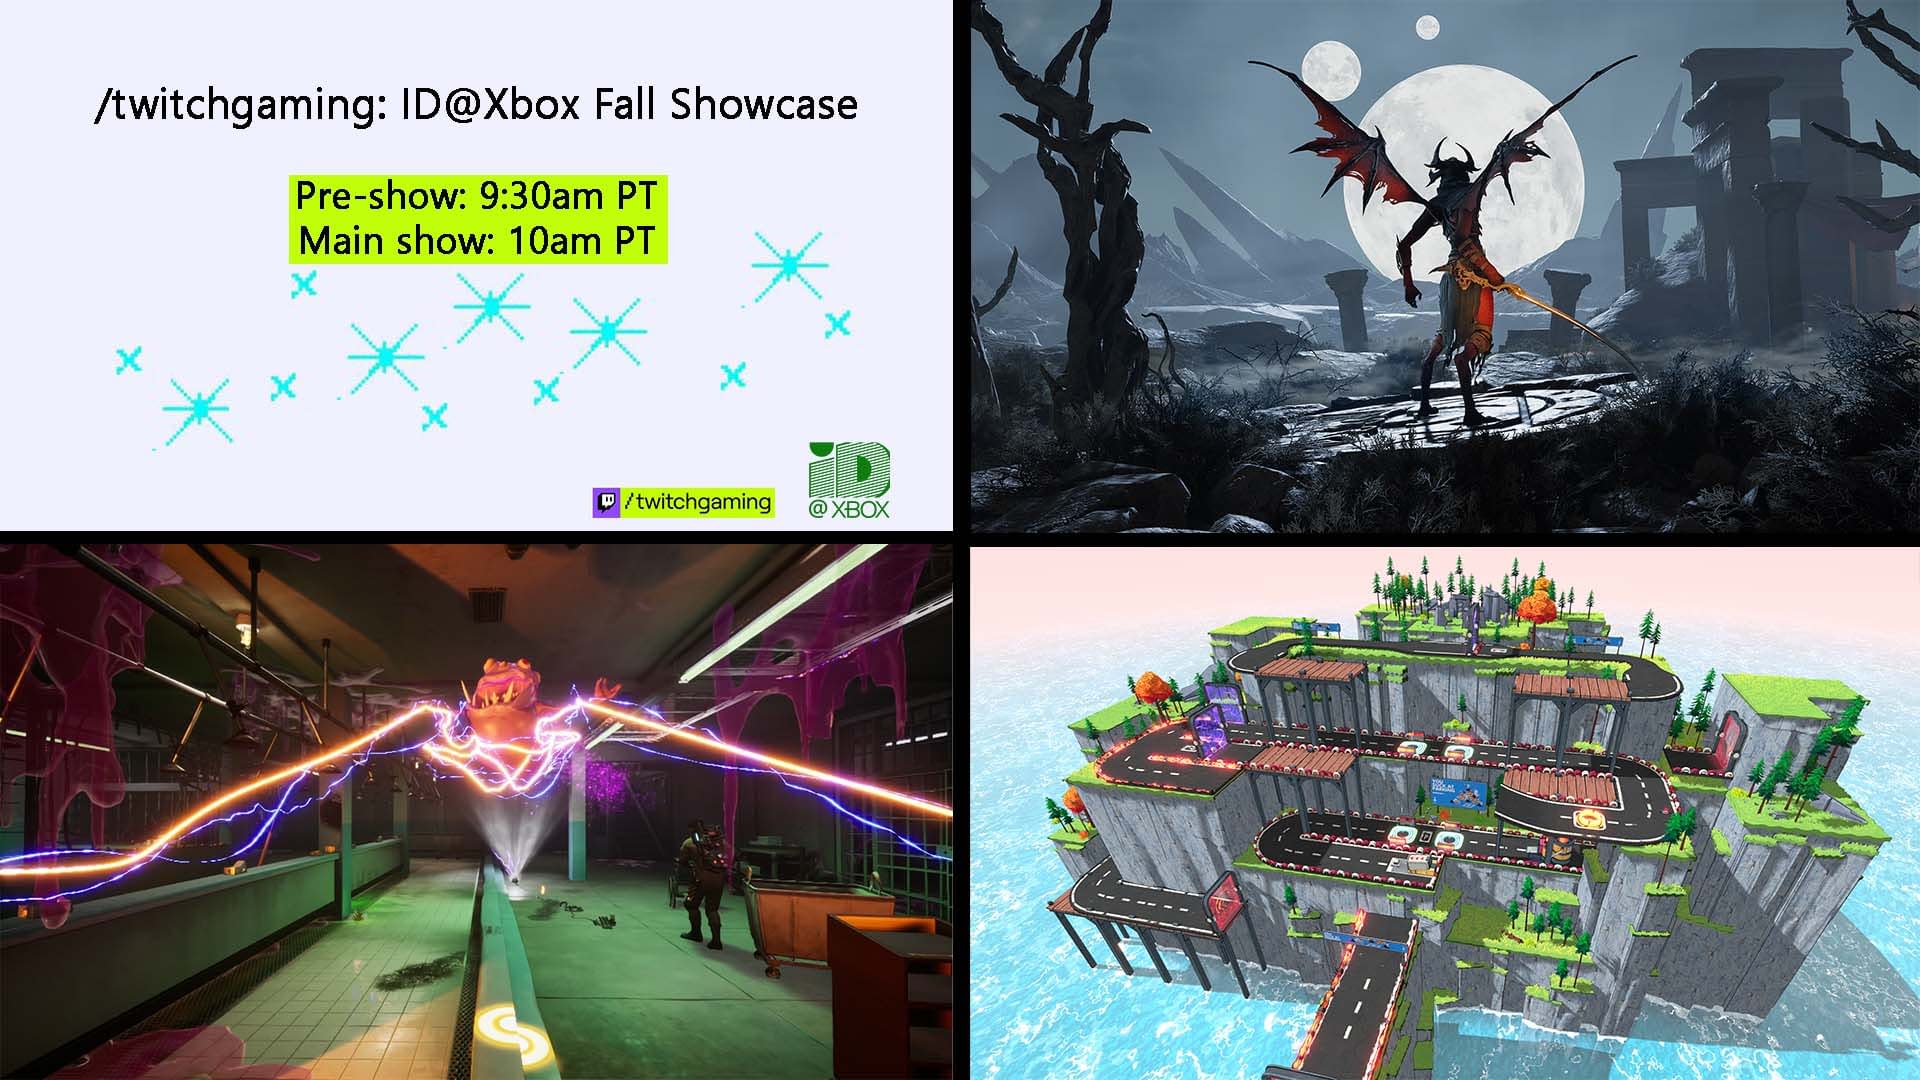 Xbox Fall Showcase 2022 Live Stream Event On September 14